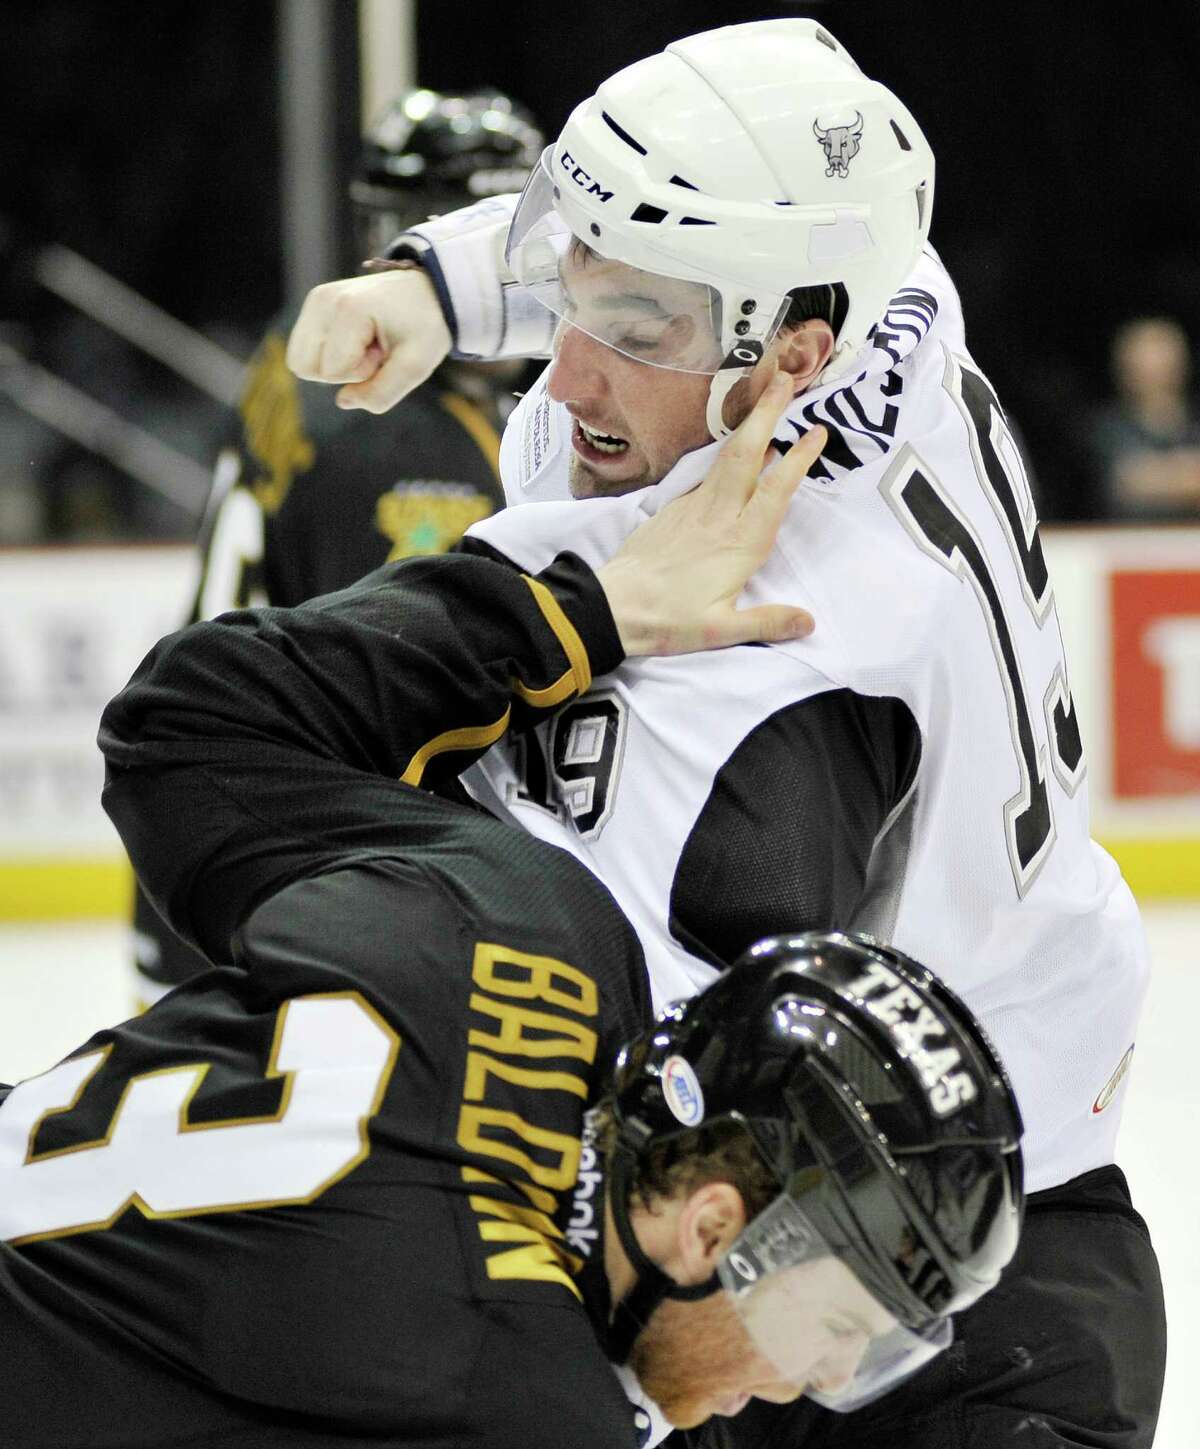 San Antonio Rampage's Garrett Wilson, top, punches Texas Stars' Gord Baldwin during the second period of an AHL hockey game, Friday, Jan. 25, 2013, in San Antonio.